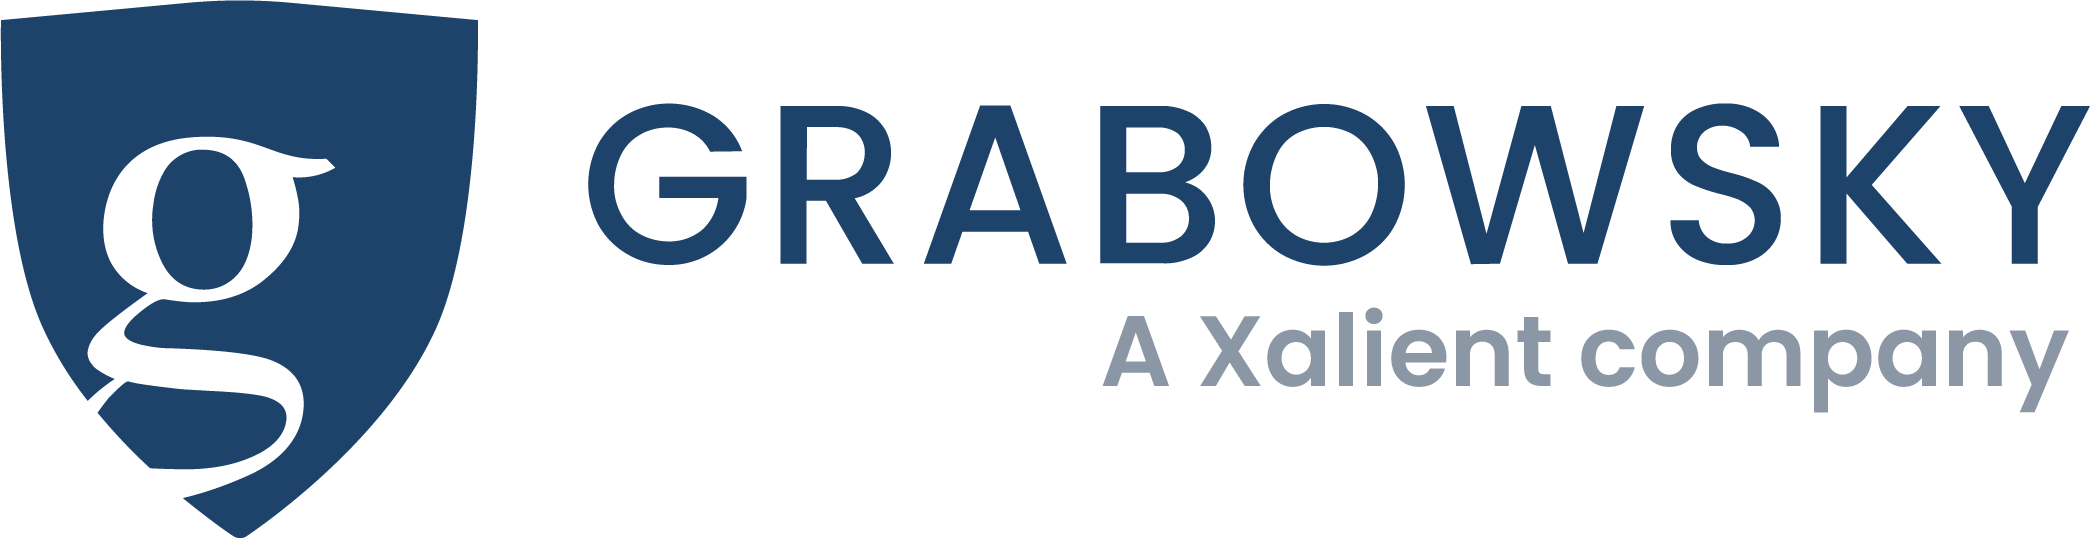 Grabowsky - Xalient logo